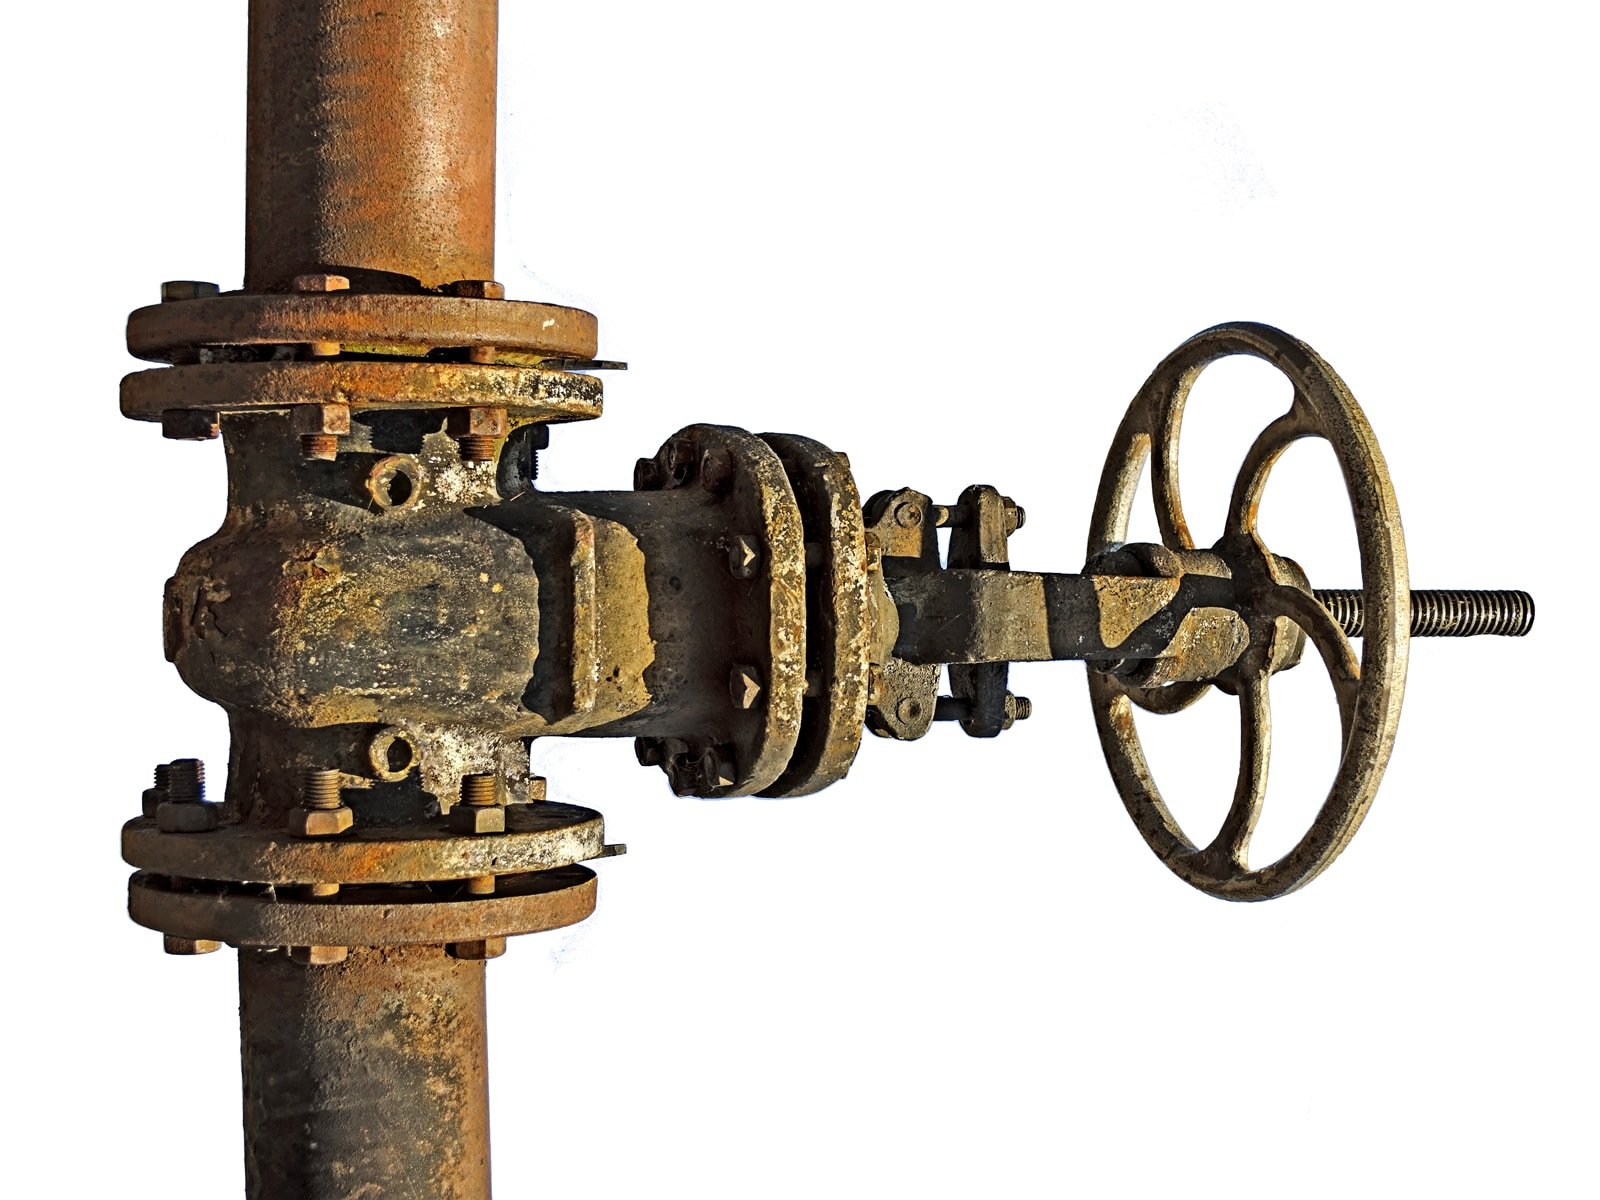 OSY main water valve